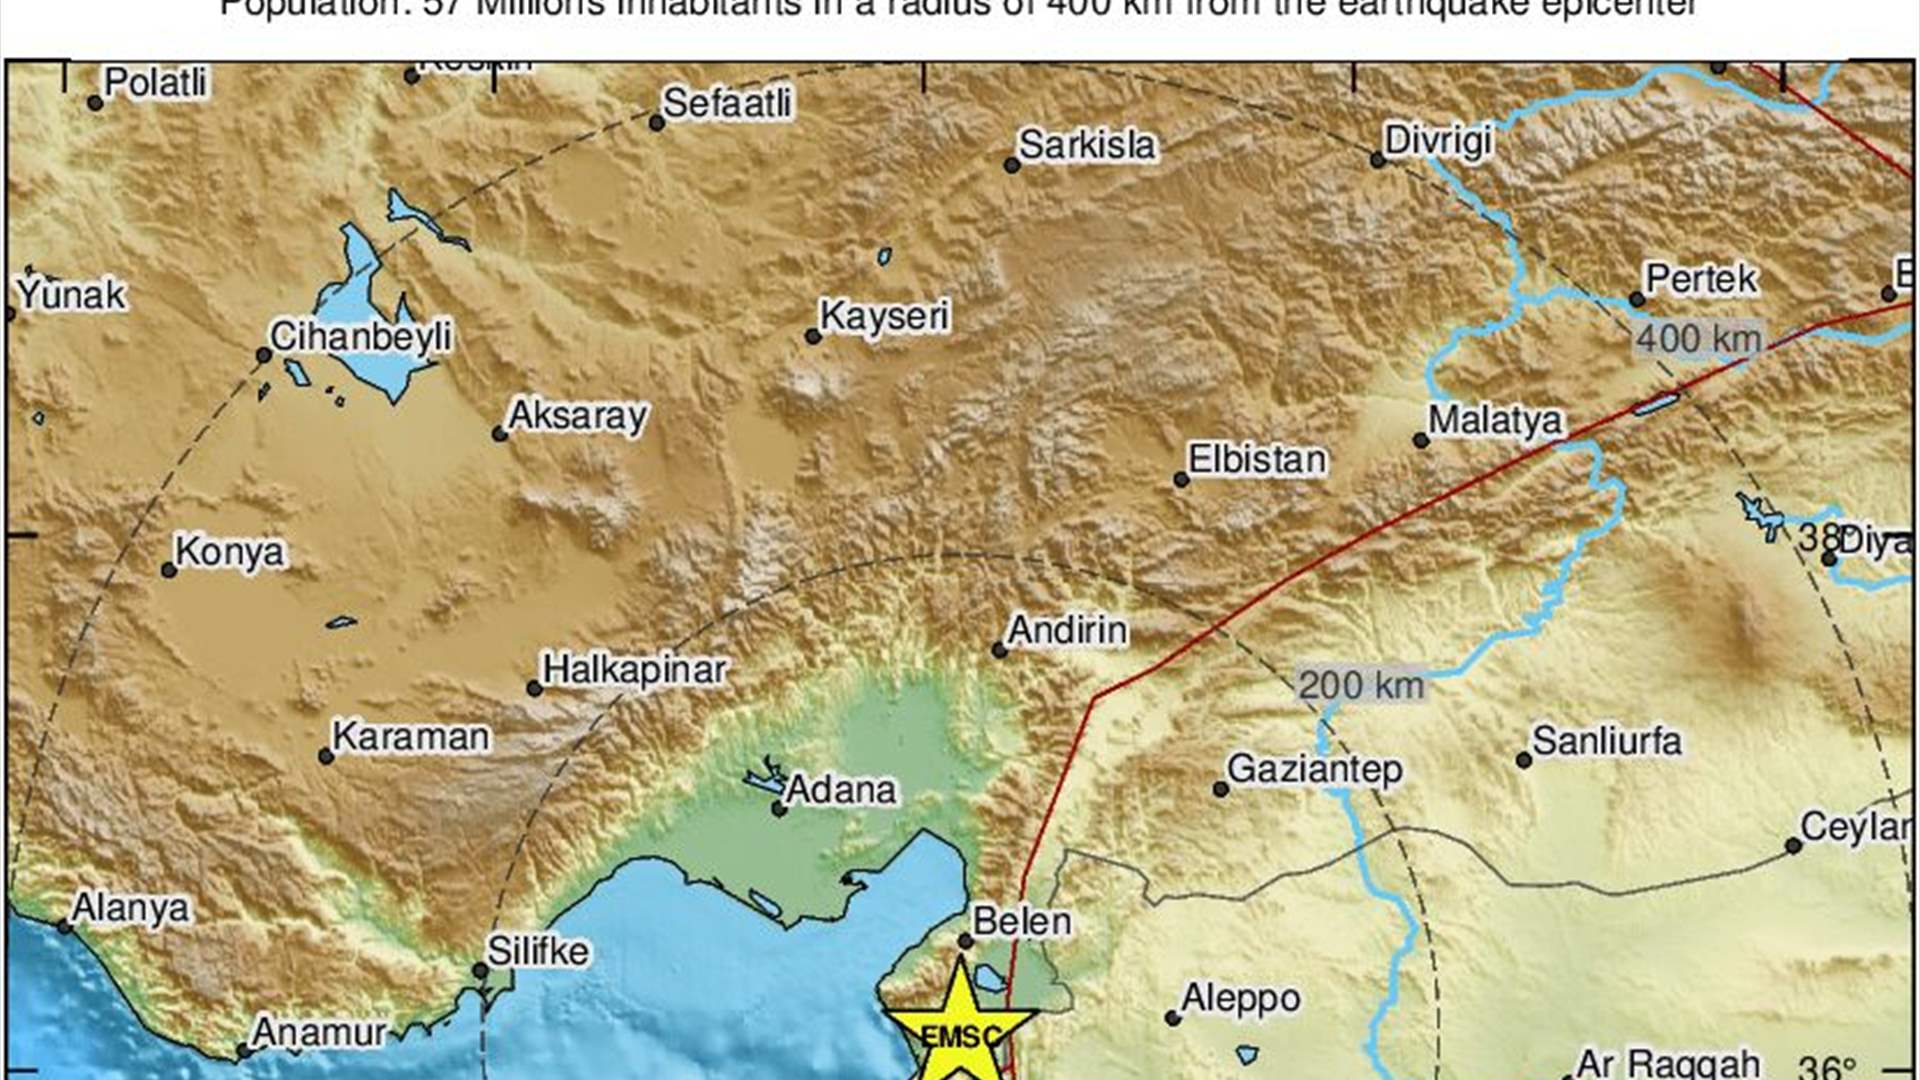 6.3 magnitude earthquake on Syrian-Turkish border felt across Lebanon